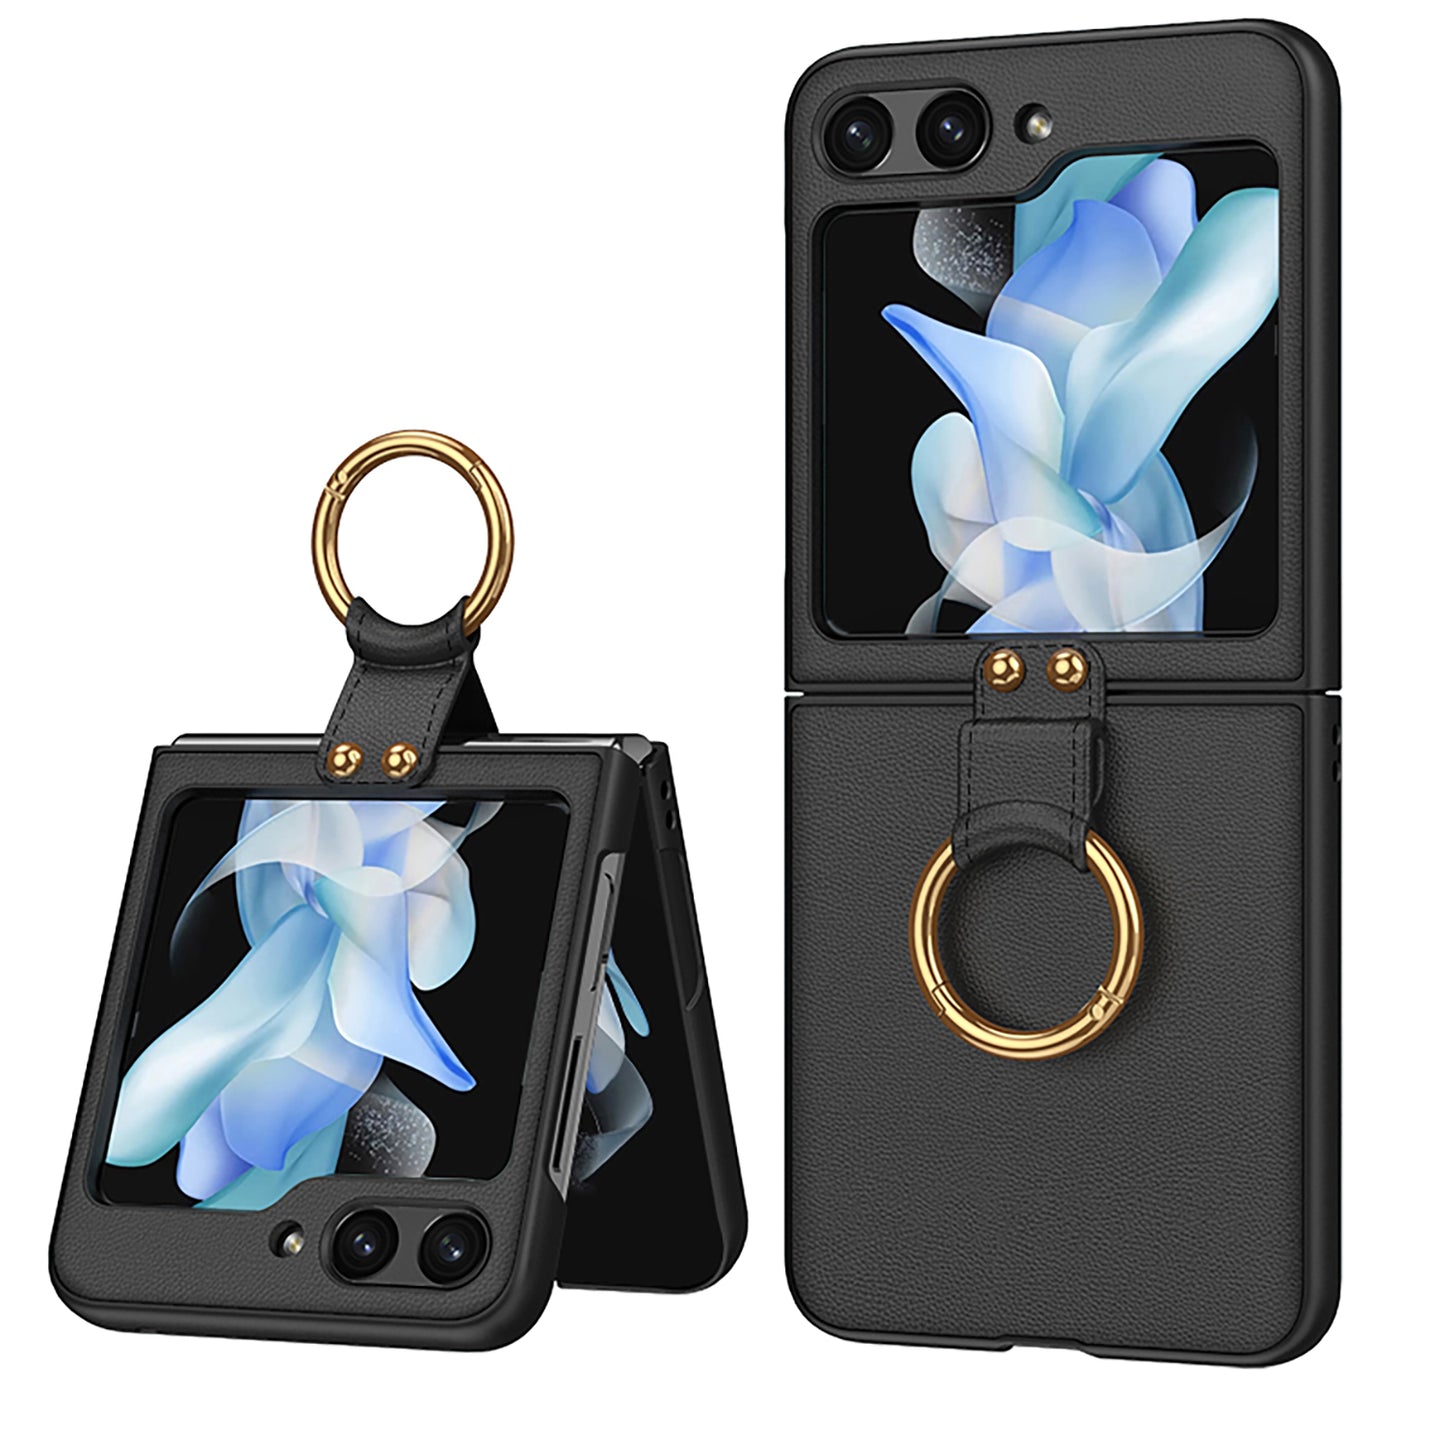 Premium Leather Phone Case With Ring Bracket For Samsung Galaxy Z Flip5 Flip4 Flip3 5G - {{ shop_name}} varyfun